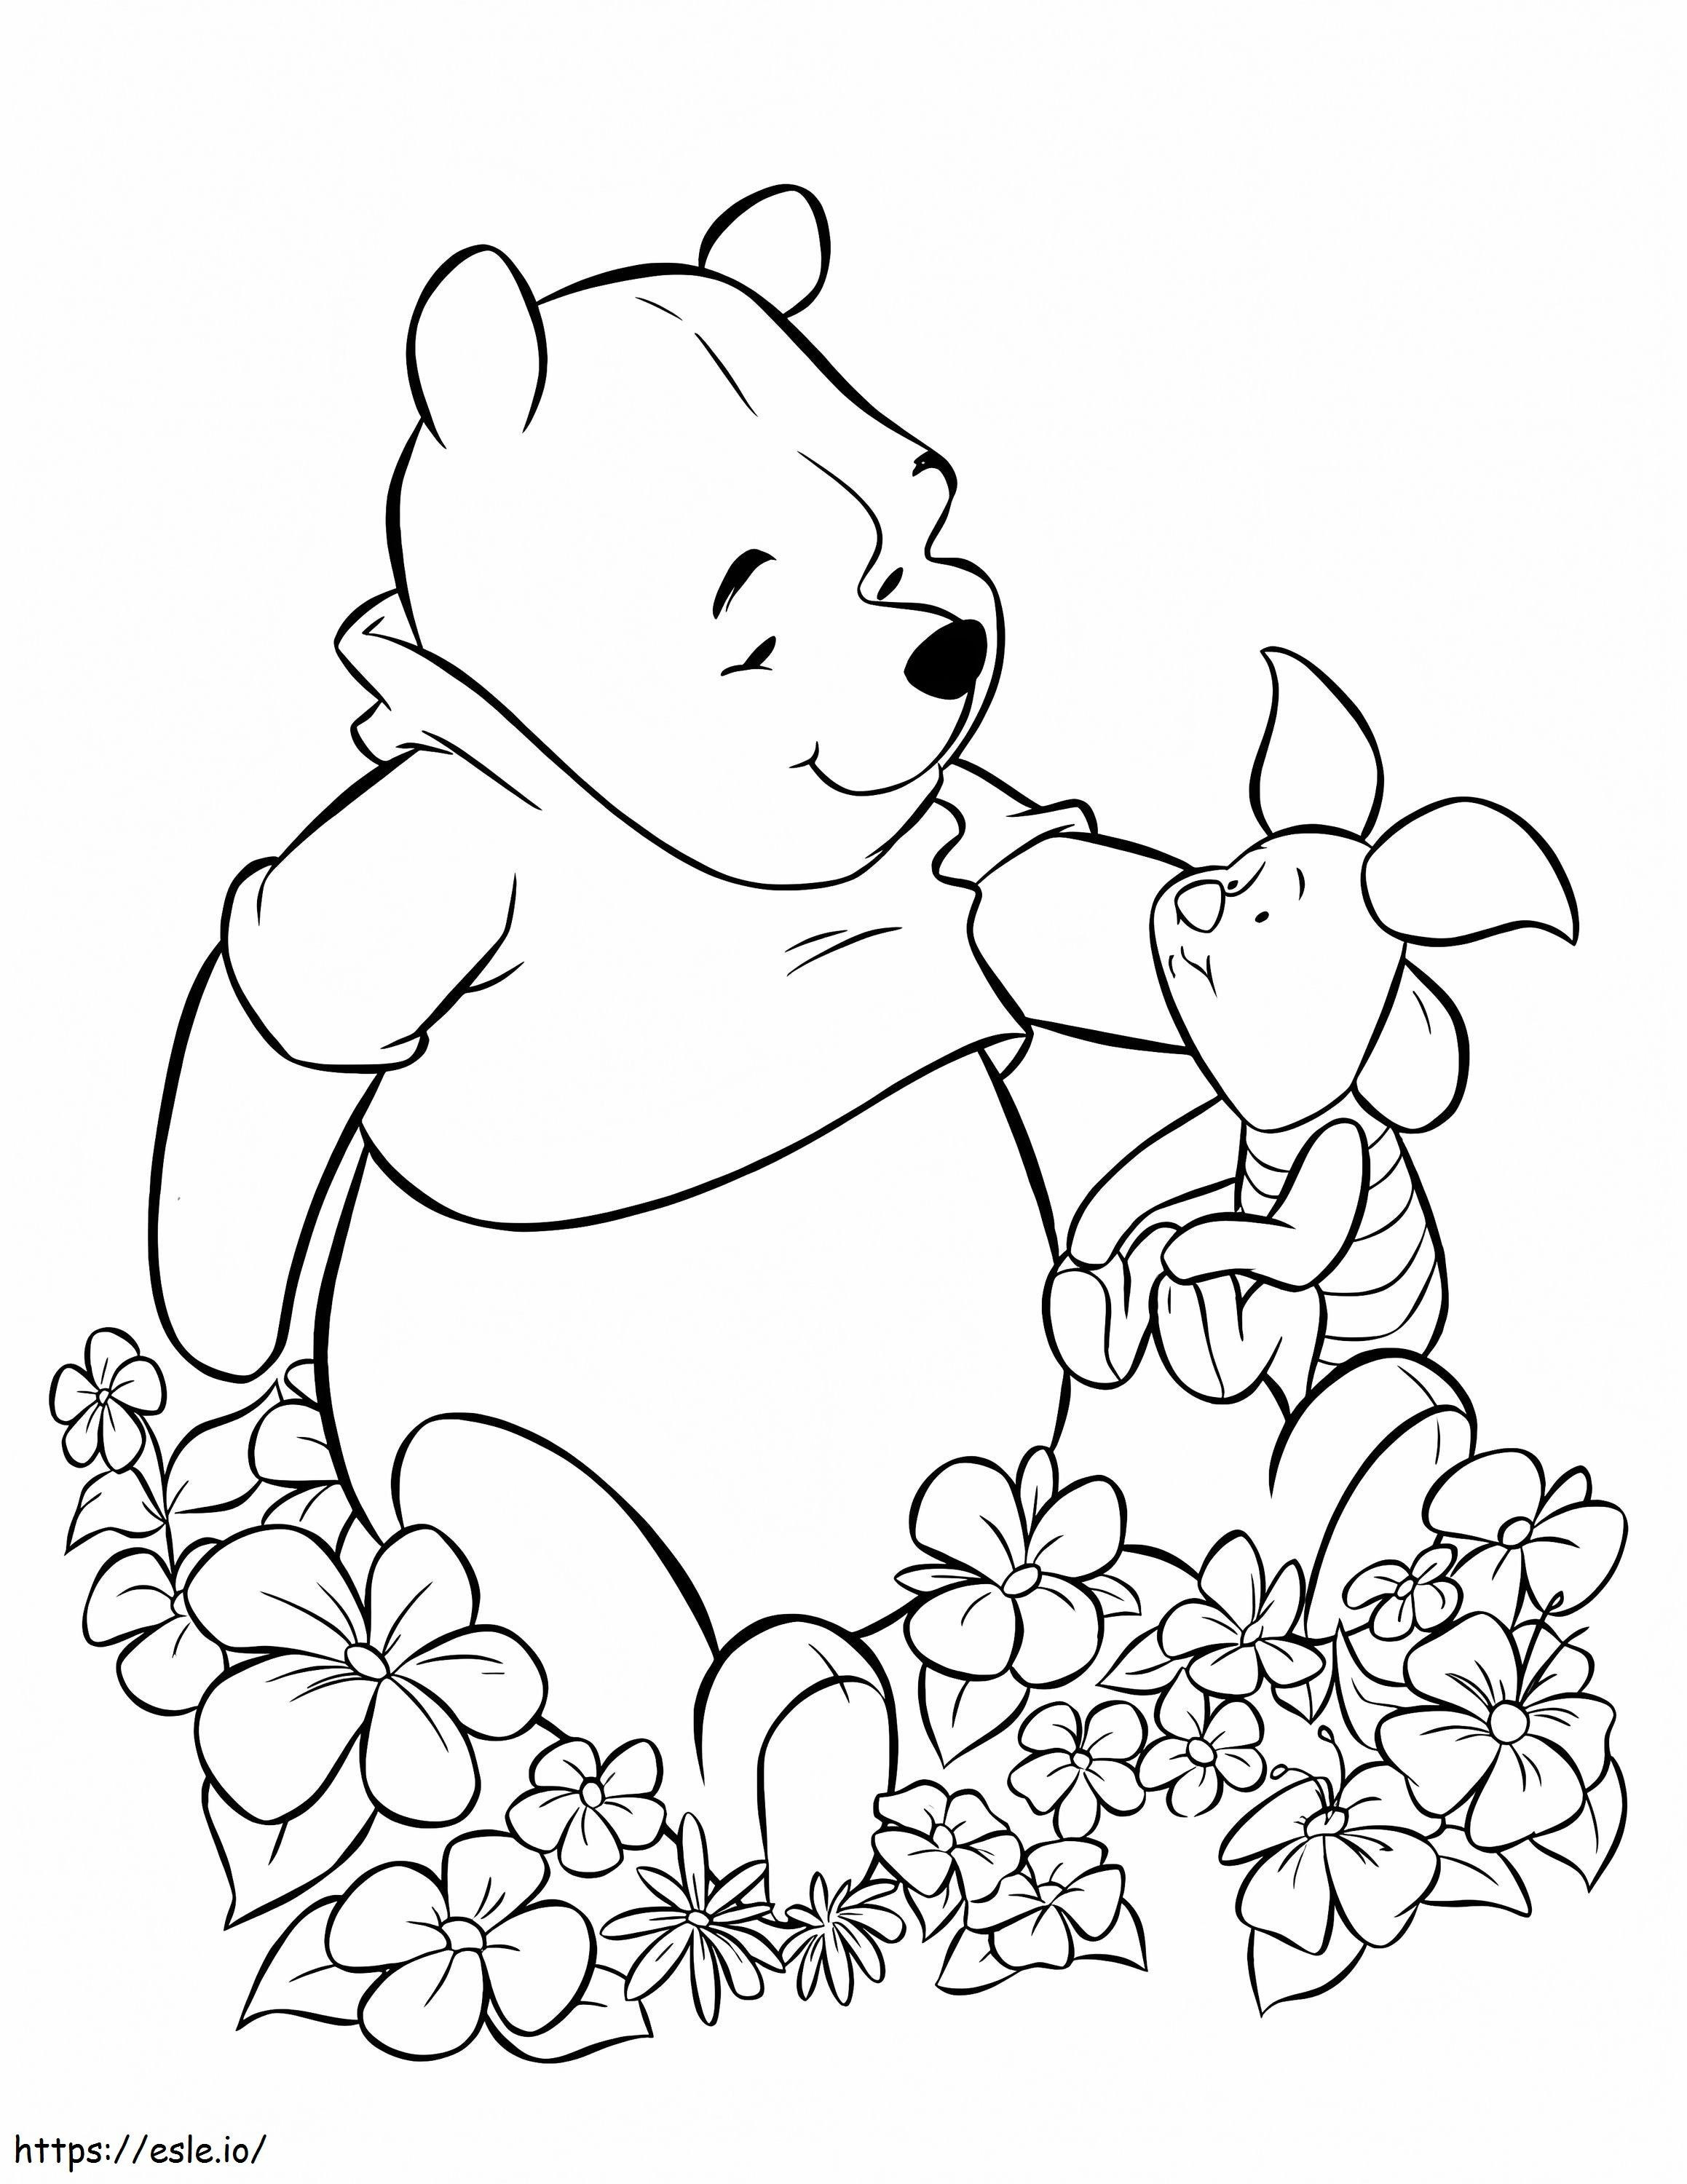 Winnie The Pooh ve Çiçekli Piglet boyama